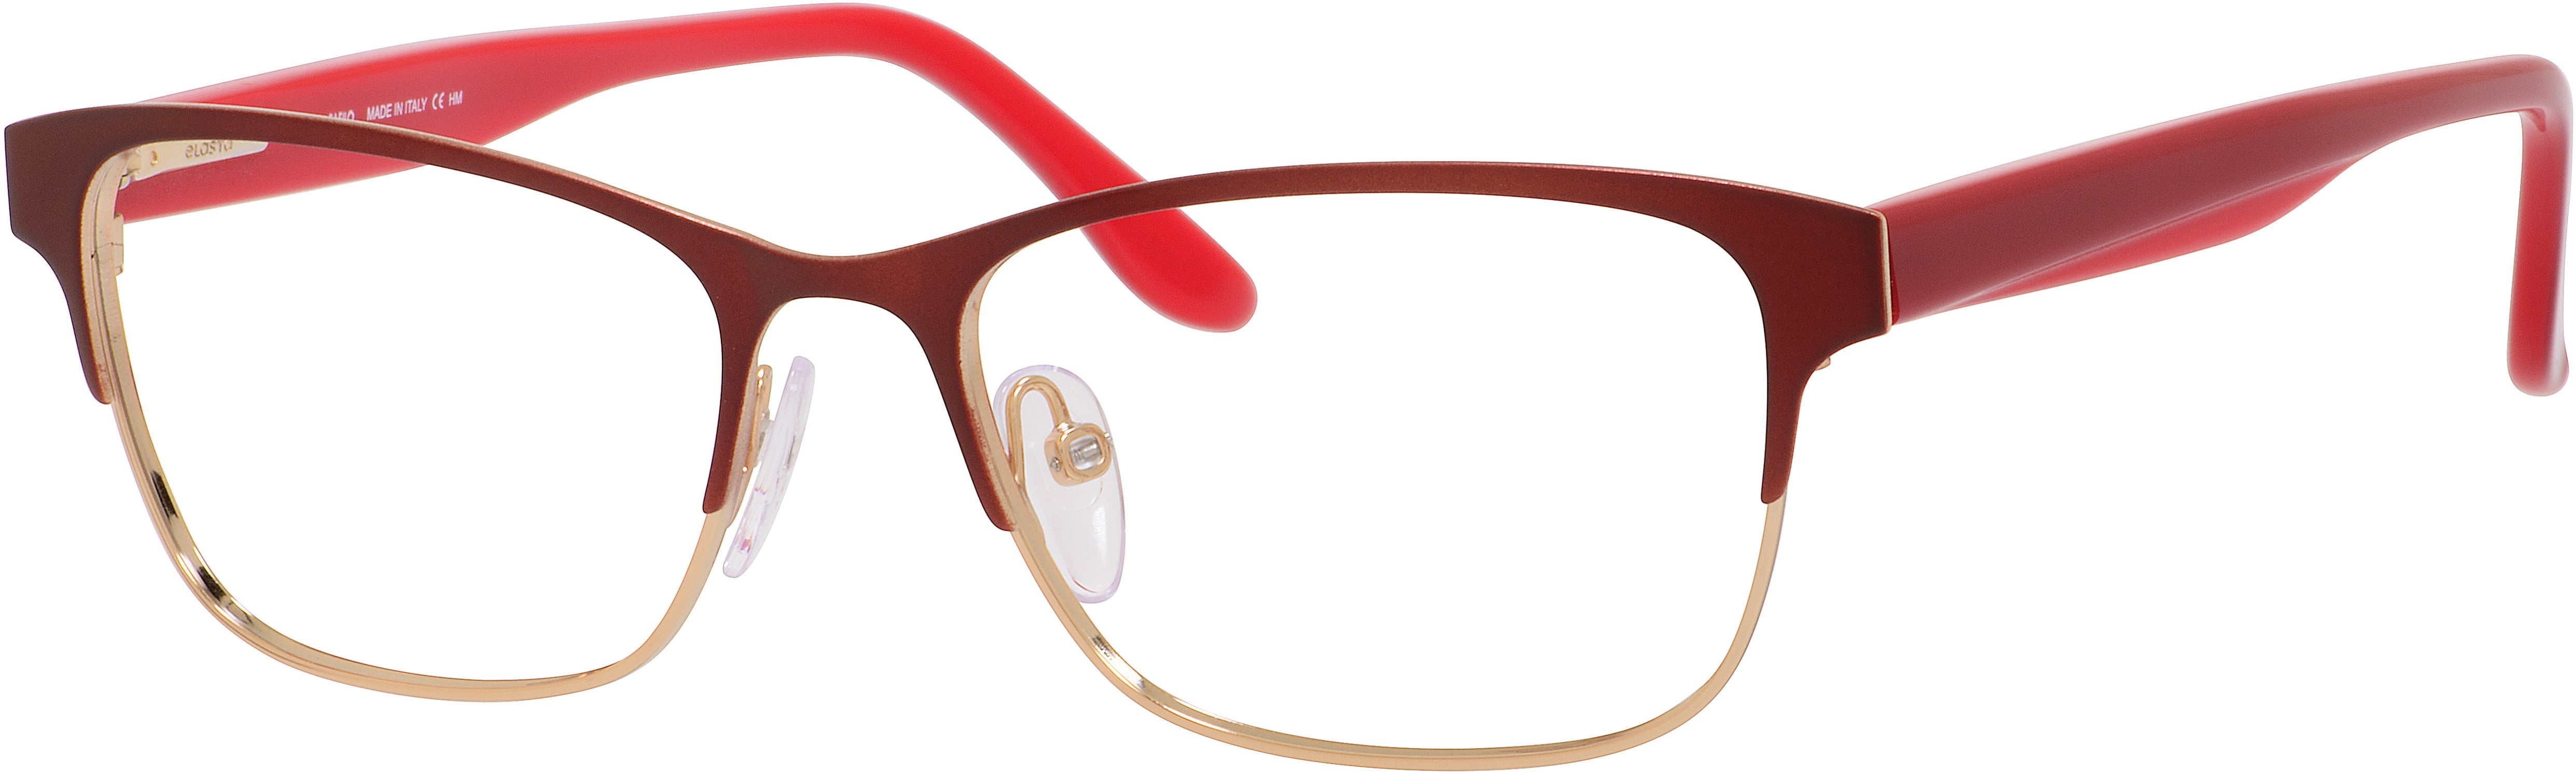  Emozioni 4371 Rectangular Eyeglasses 0788-0788  Red Burgundy (00 Demo Lens)